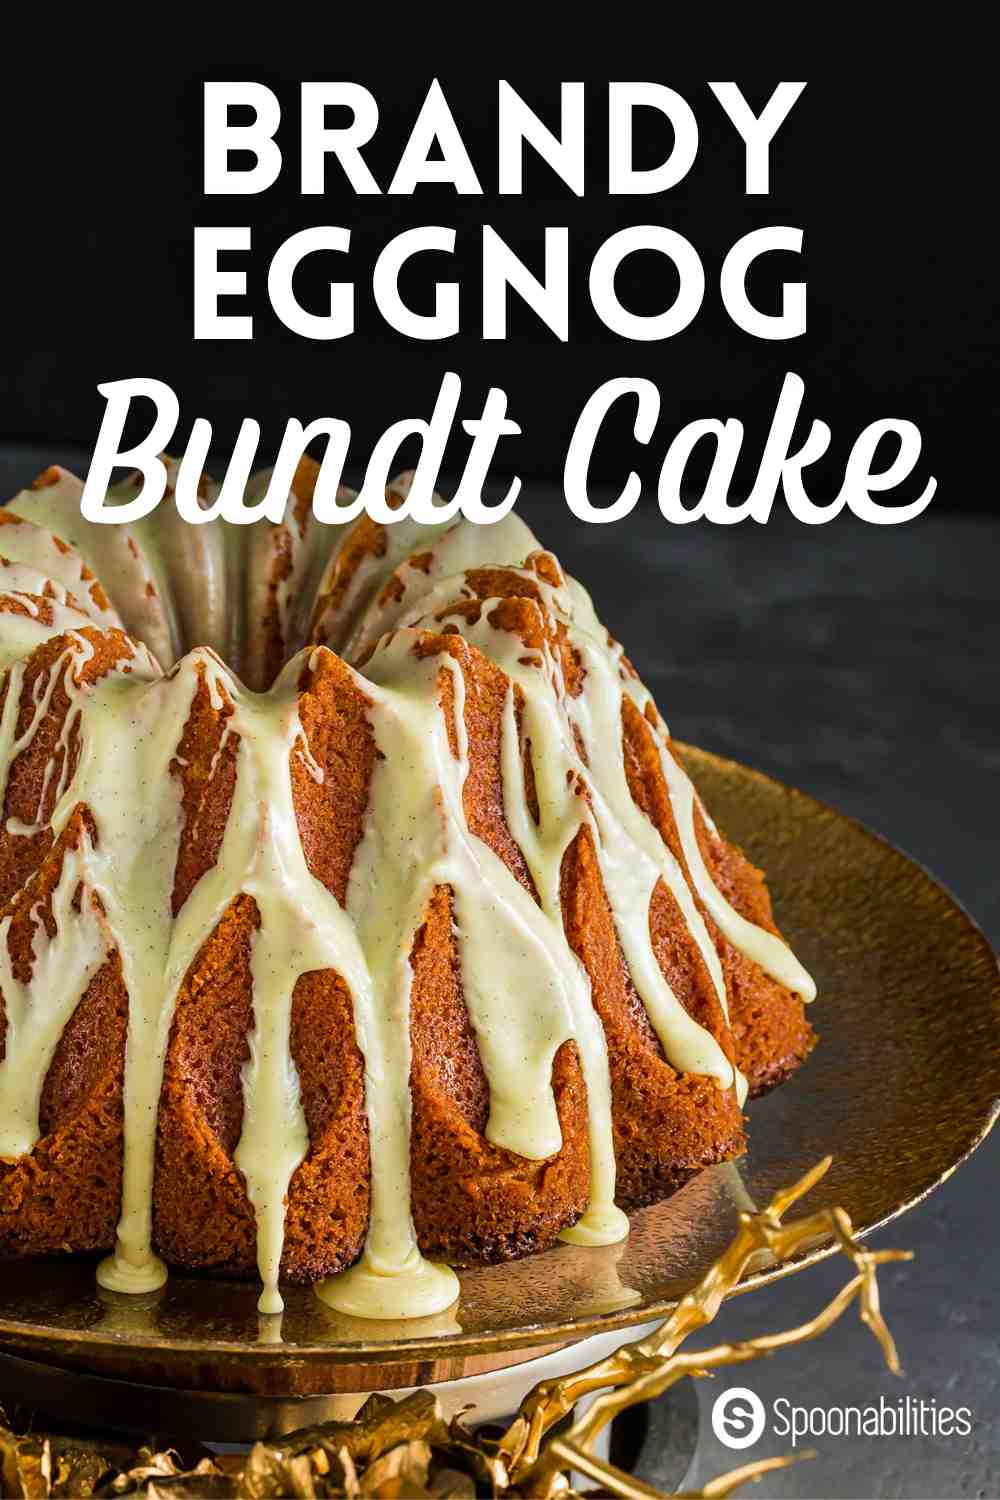 Eggnog bundt cake with eggnog brandy compound drizzle